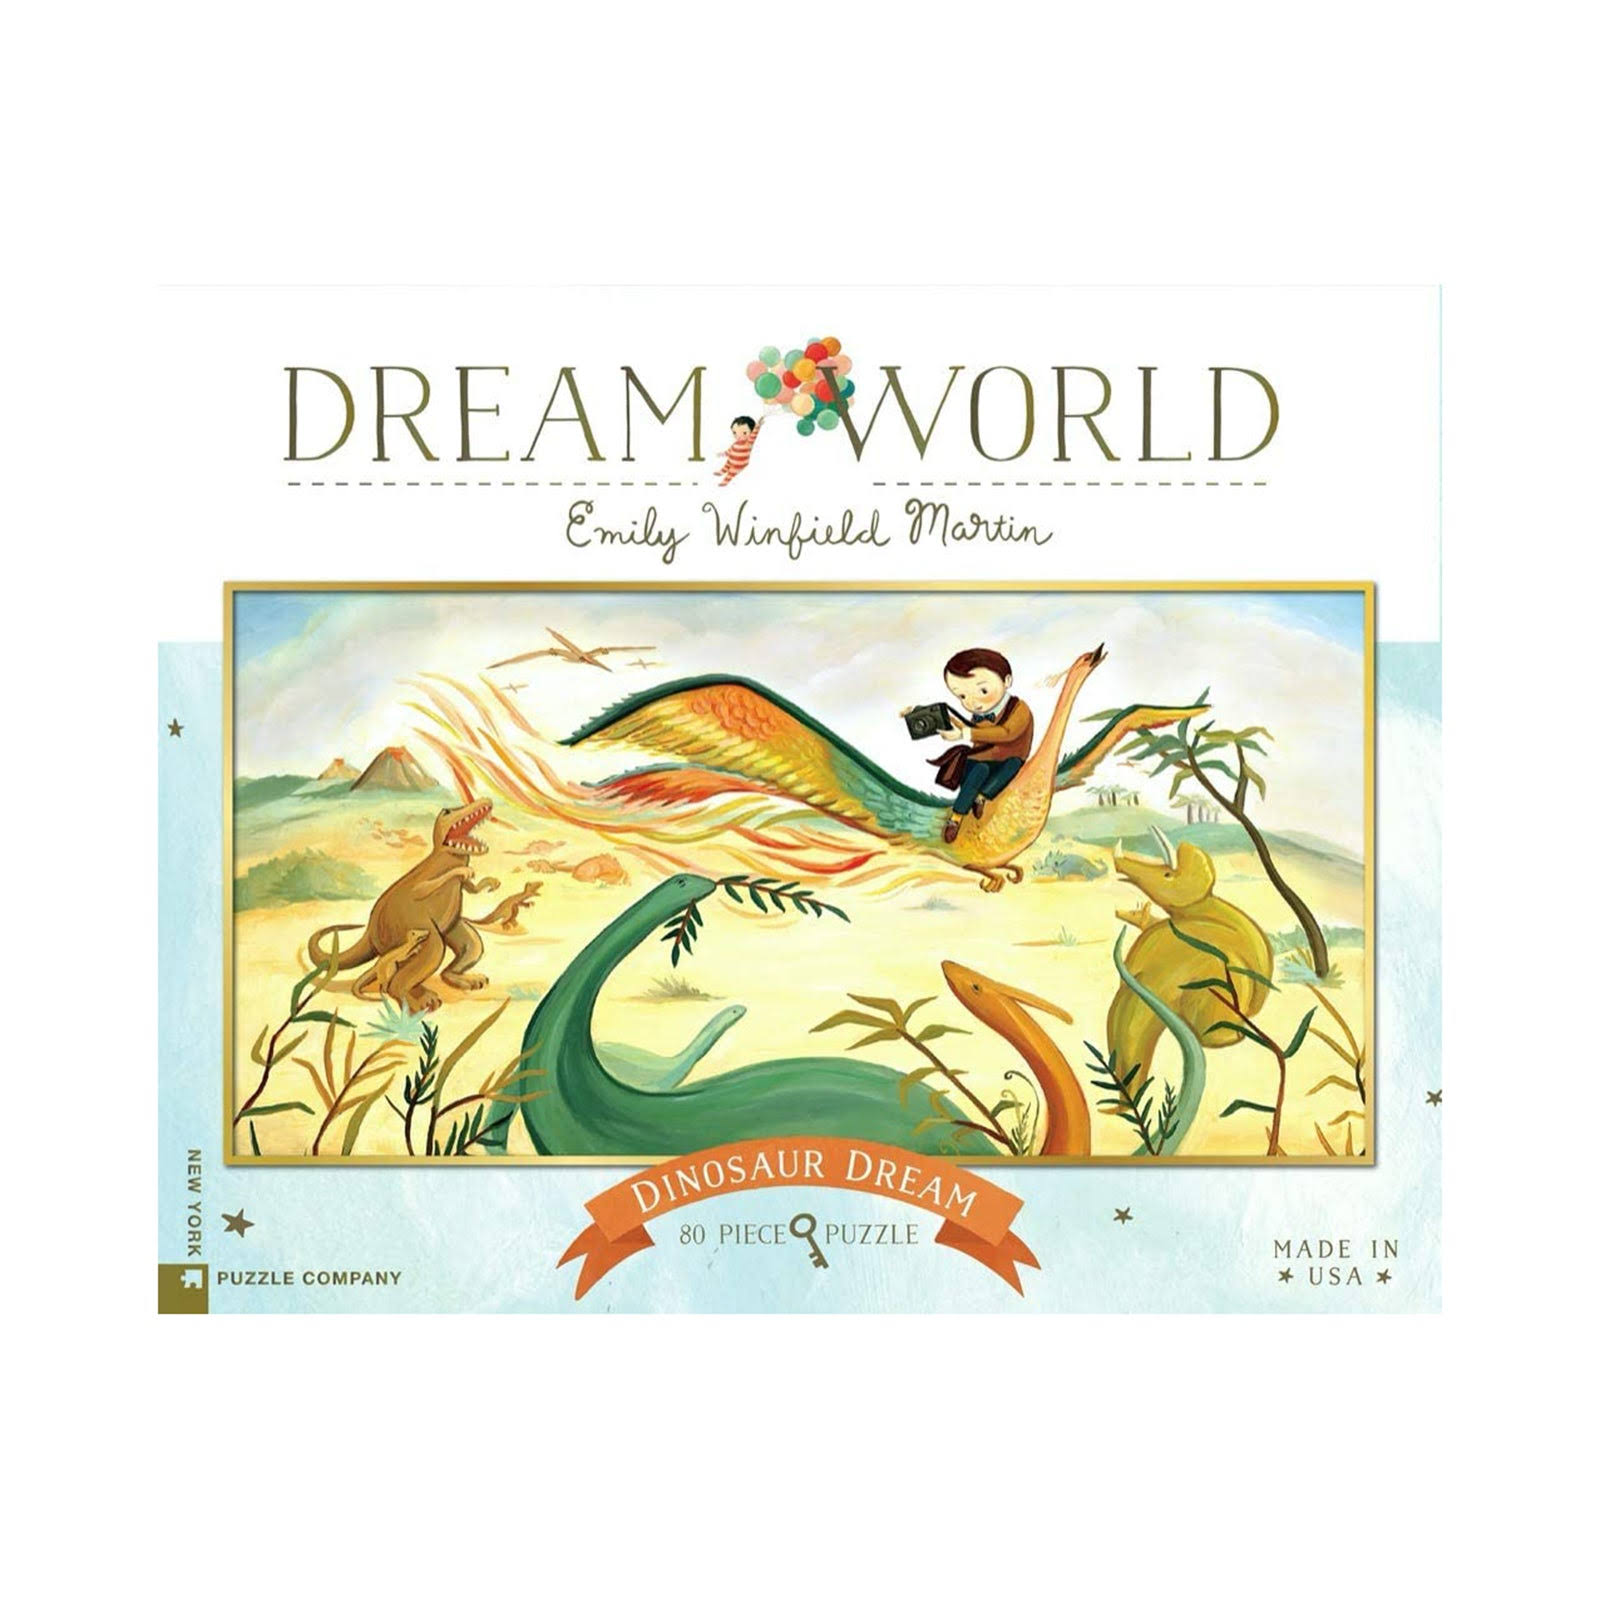 Dream World - Dinosaur Dream 80 Piece Puzzle